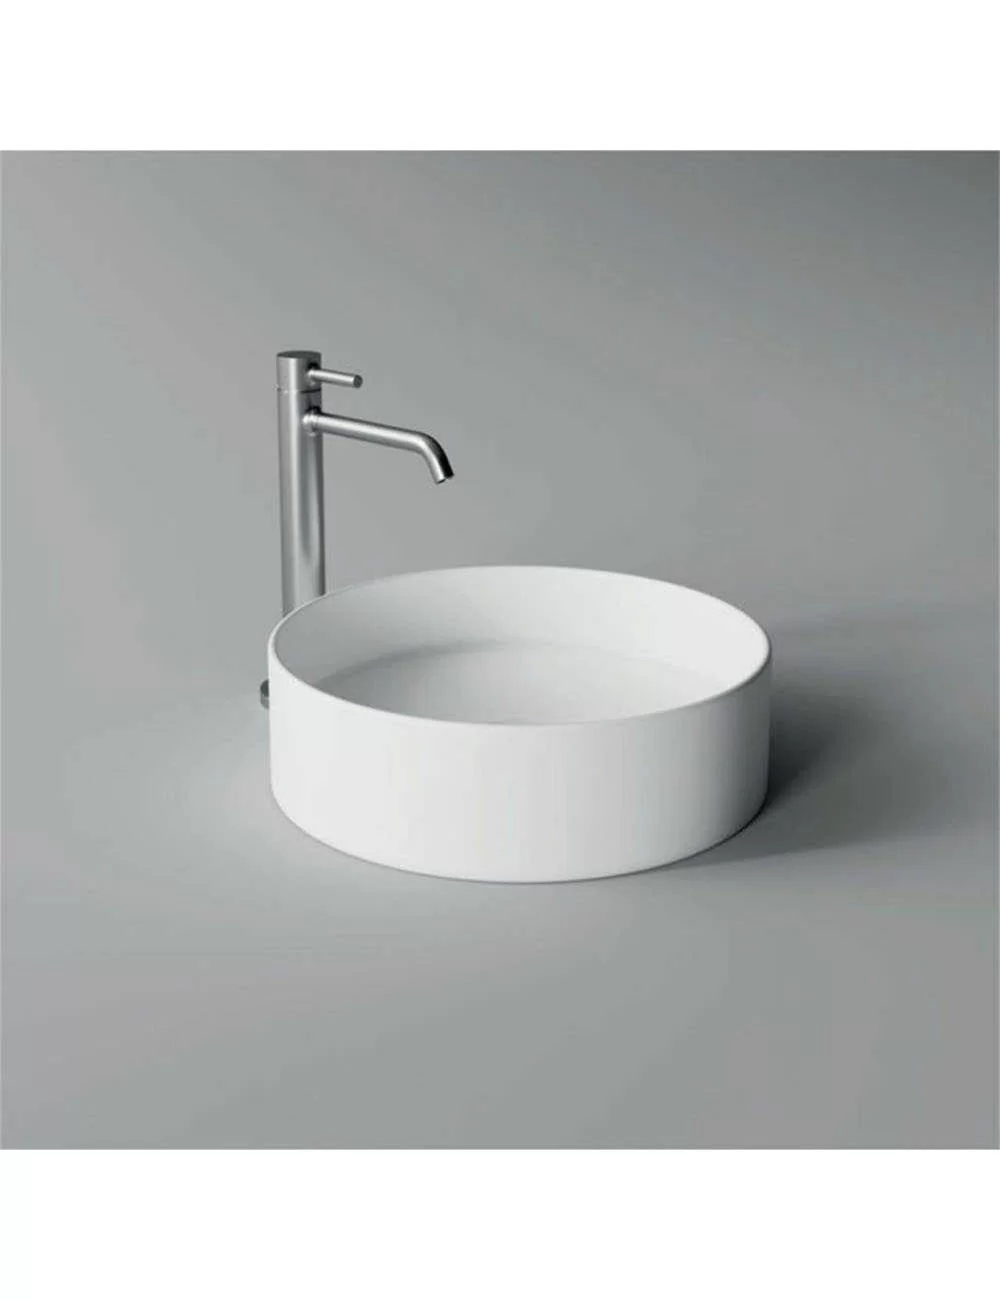 Countertop washbasin Hide circle collection by Alice ceramica